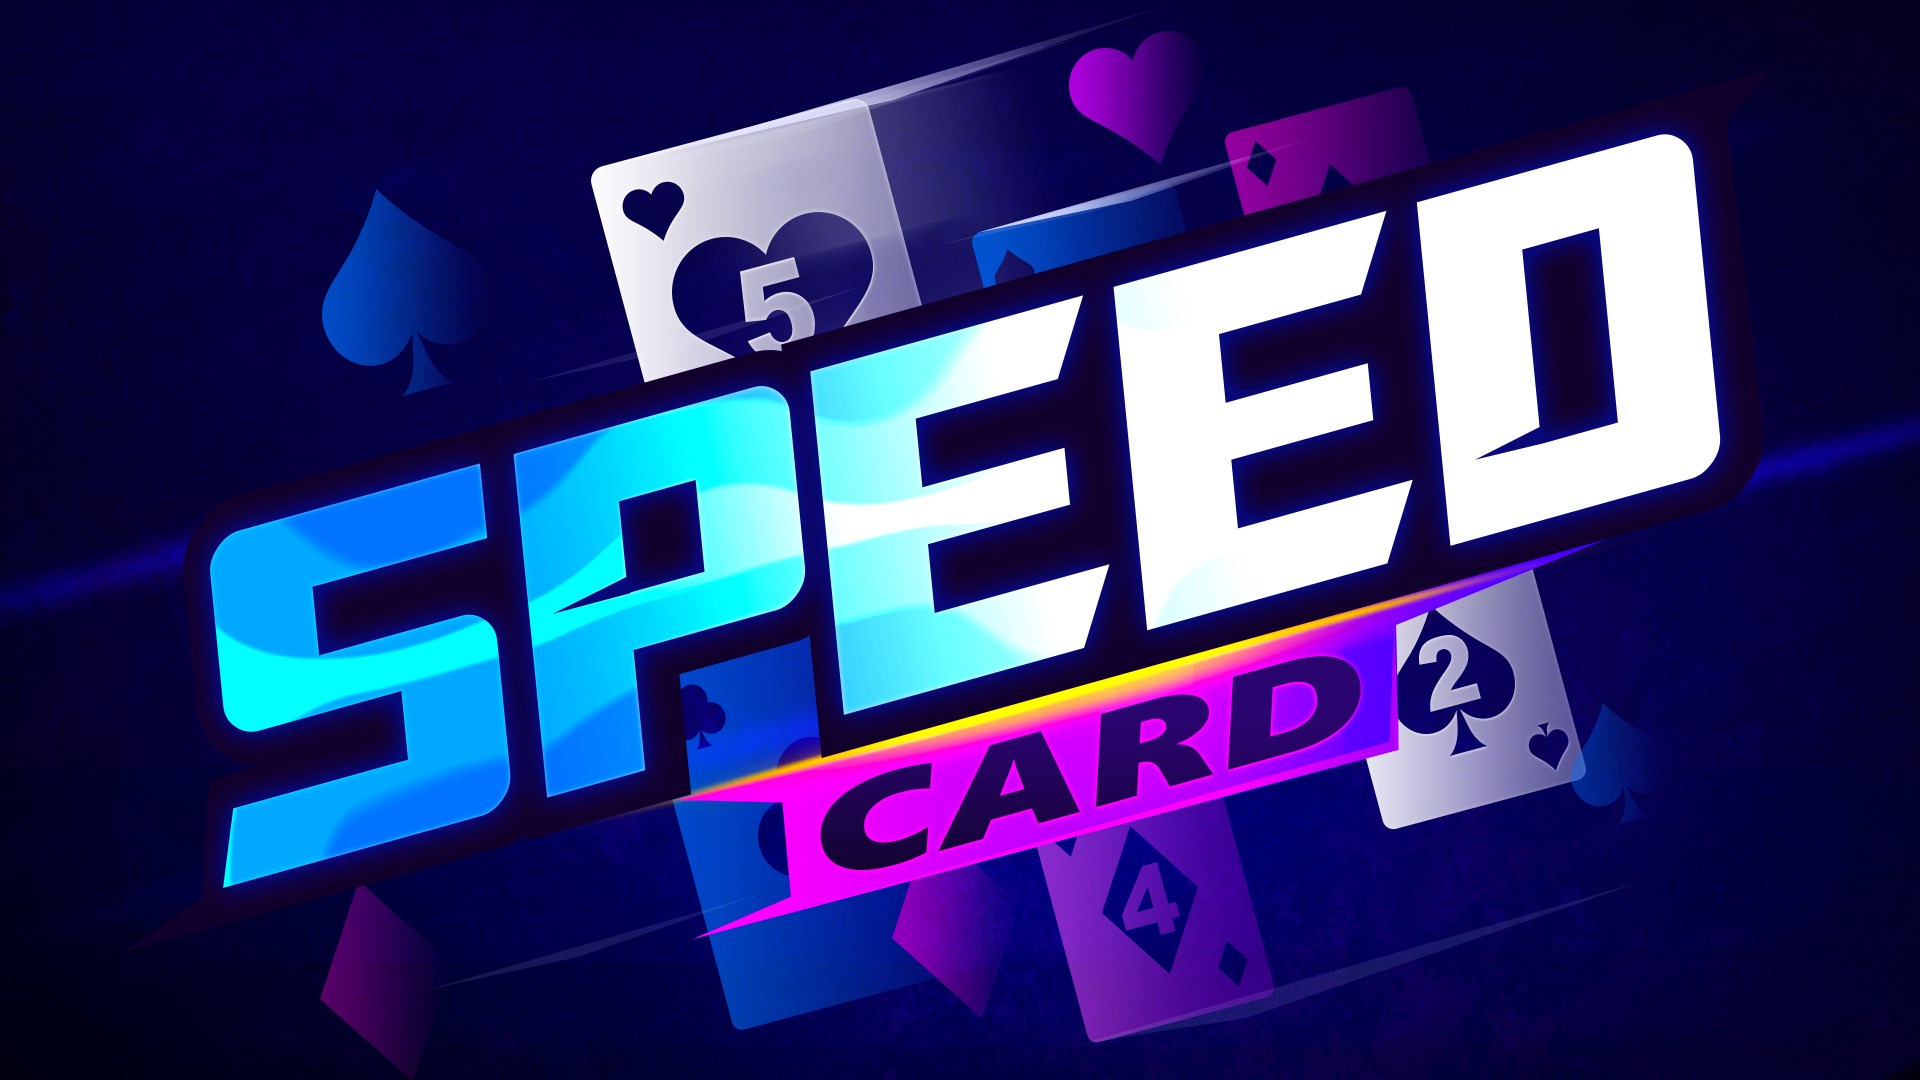 Speed card. Spat игра. Spat game. Slam.